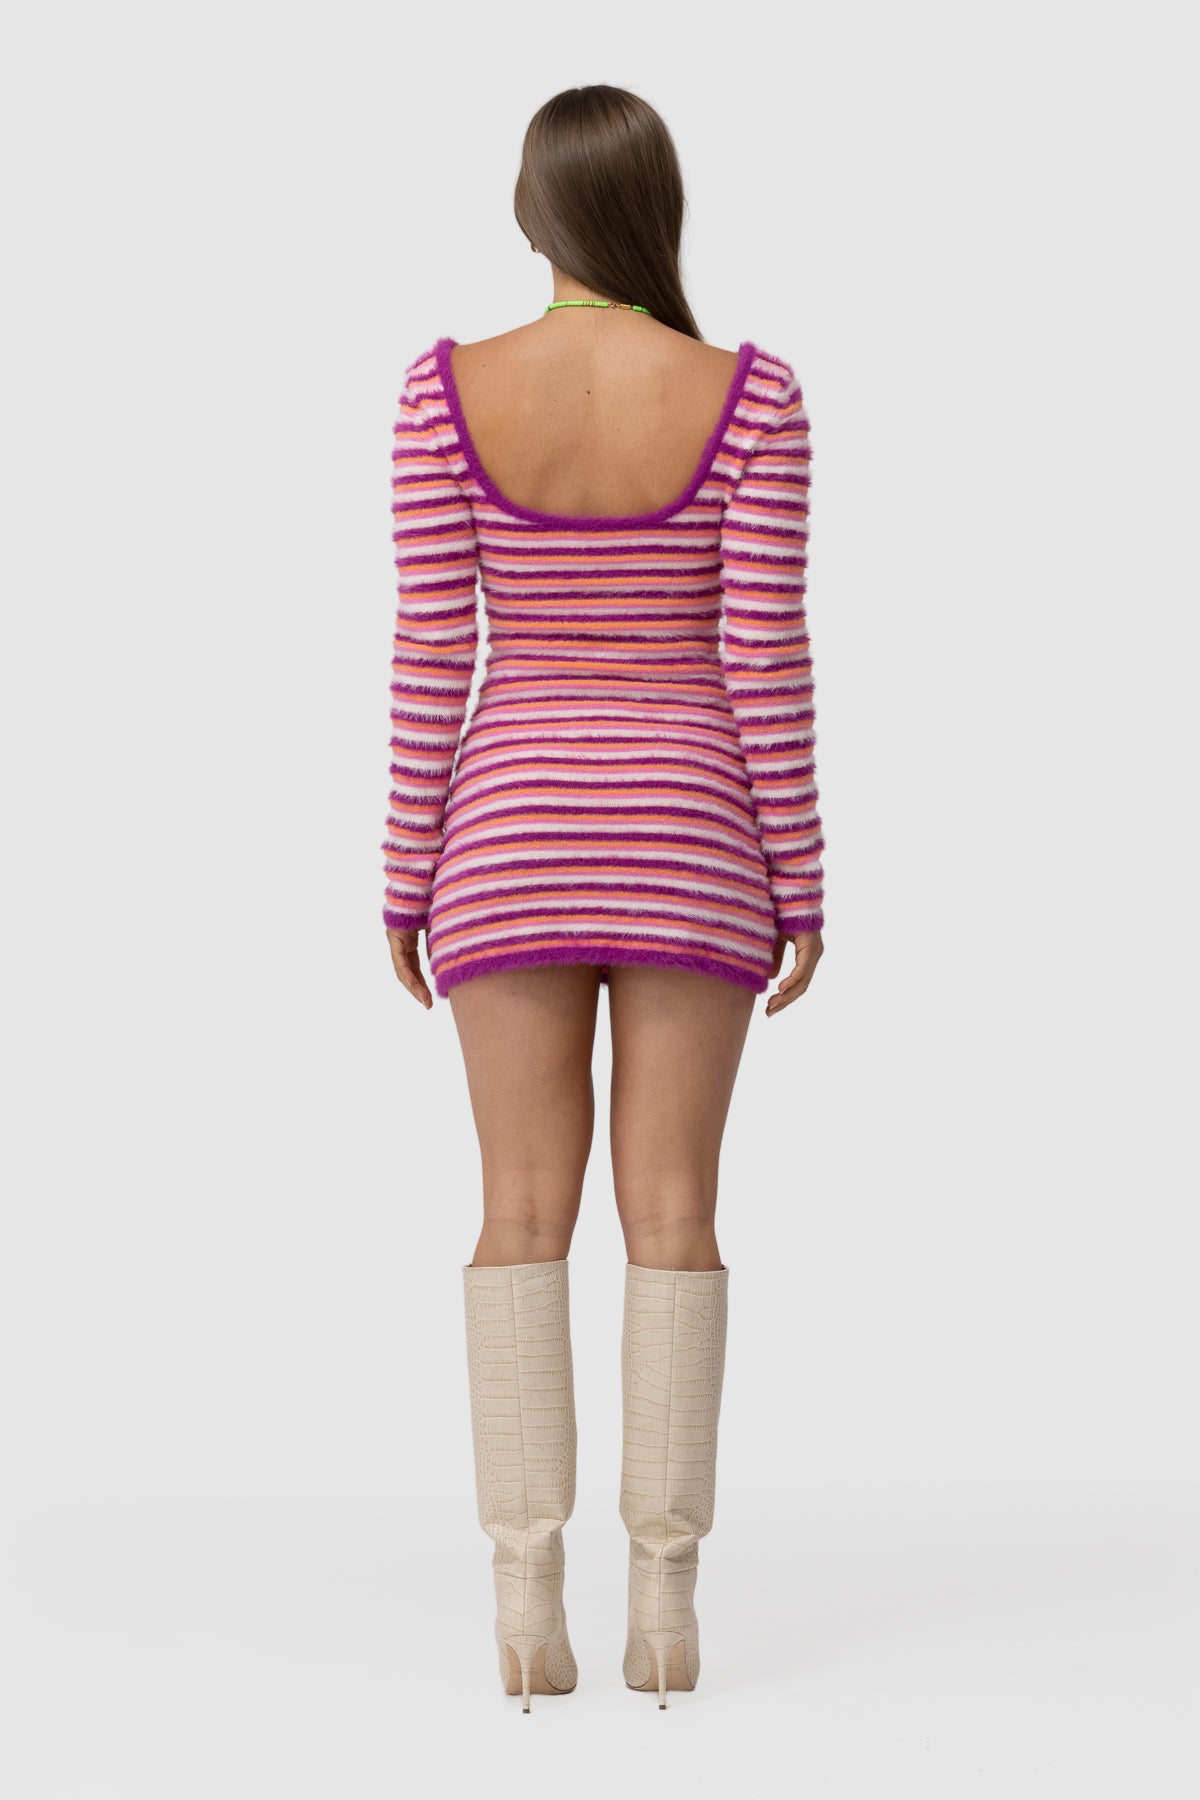 Estie Knit Dress - Candy Stripe